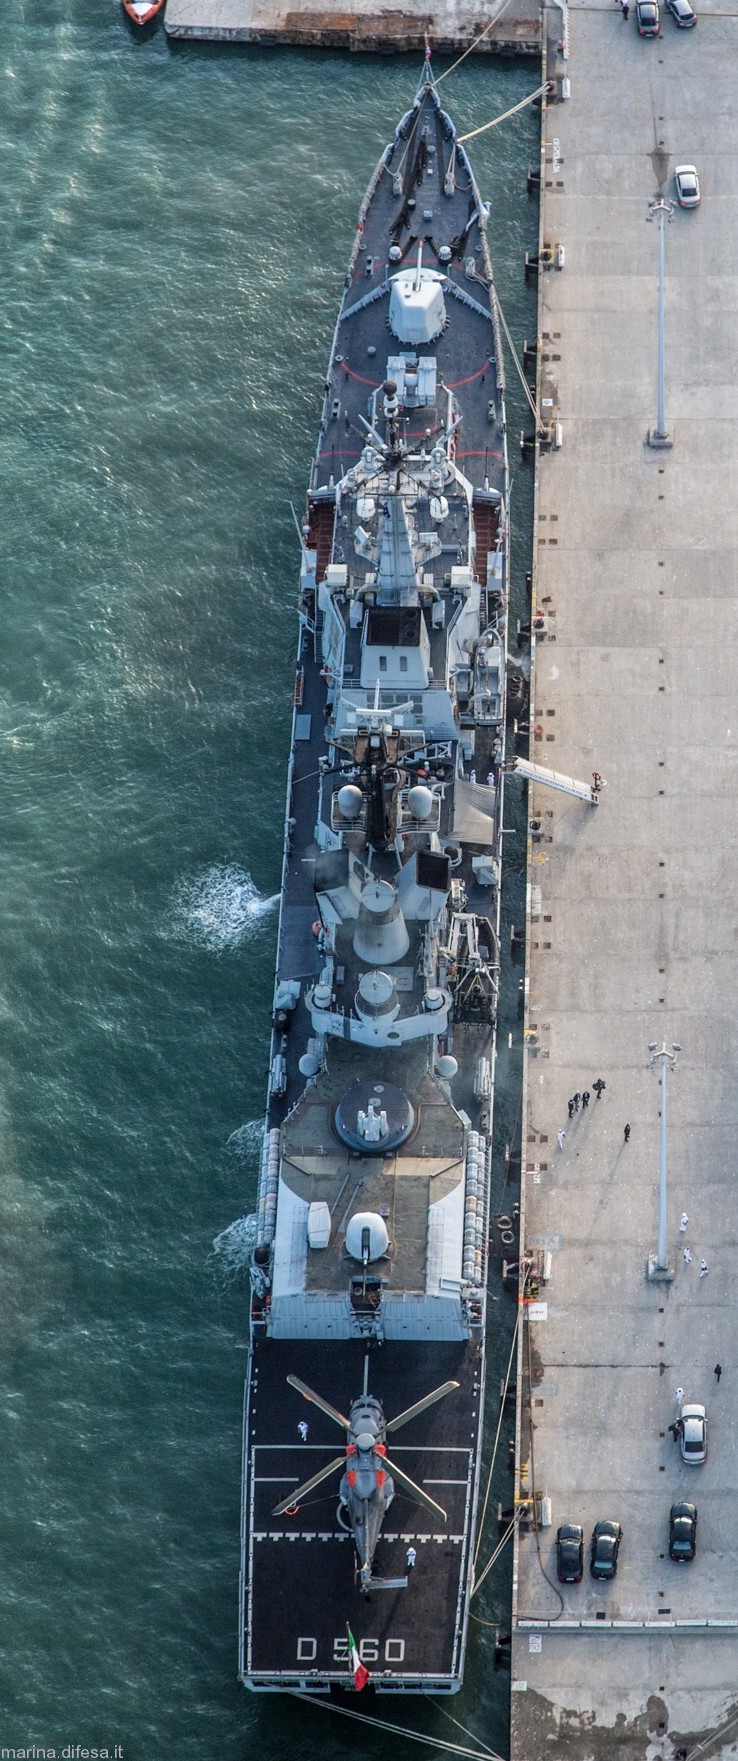 d-560 luigi durand de la penne its nave guided missile destroyer ddg italian navy marina militare 59